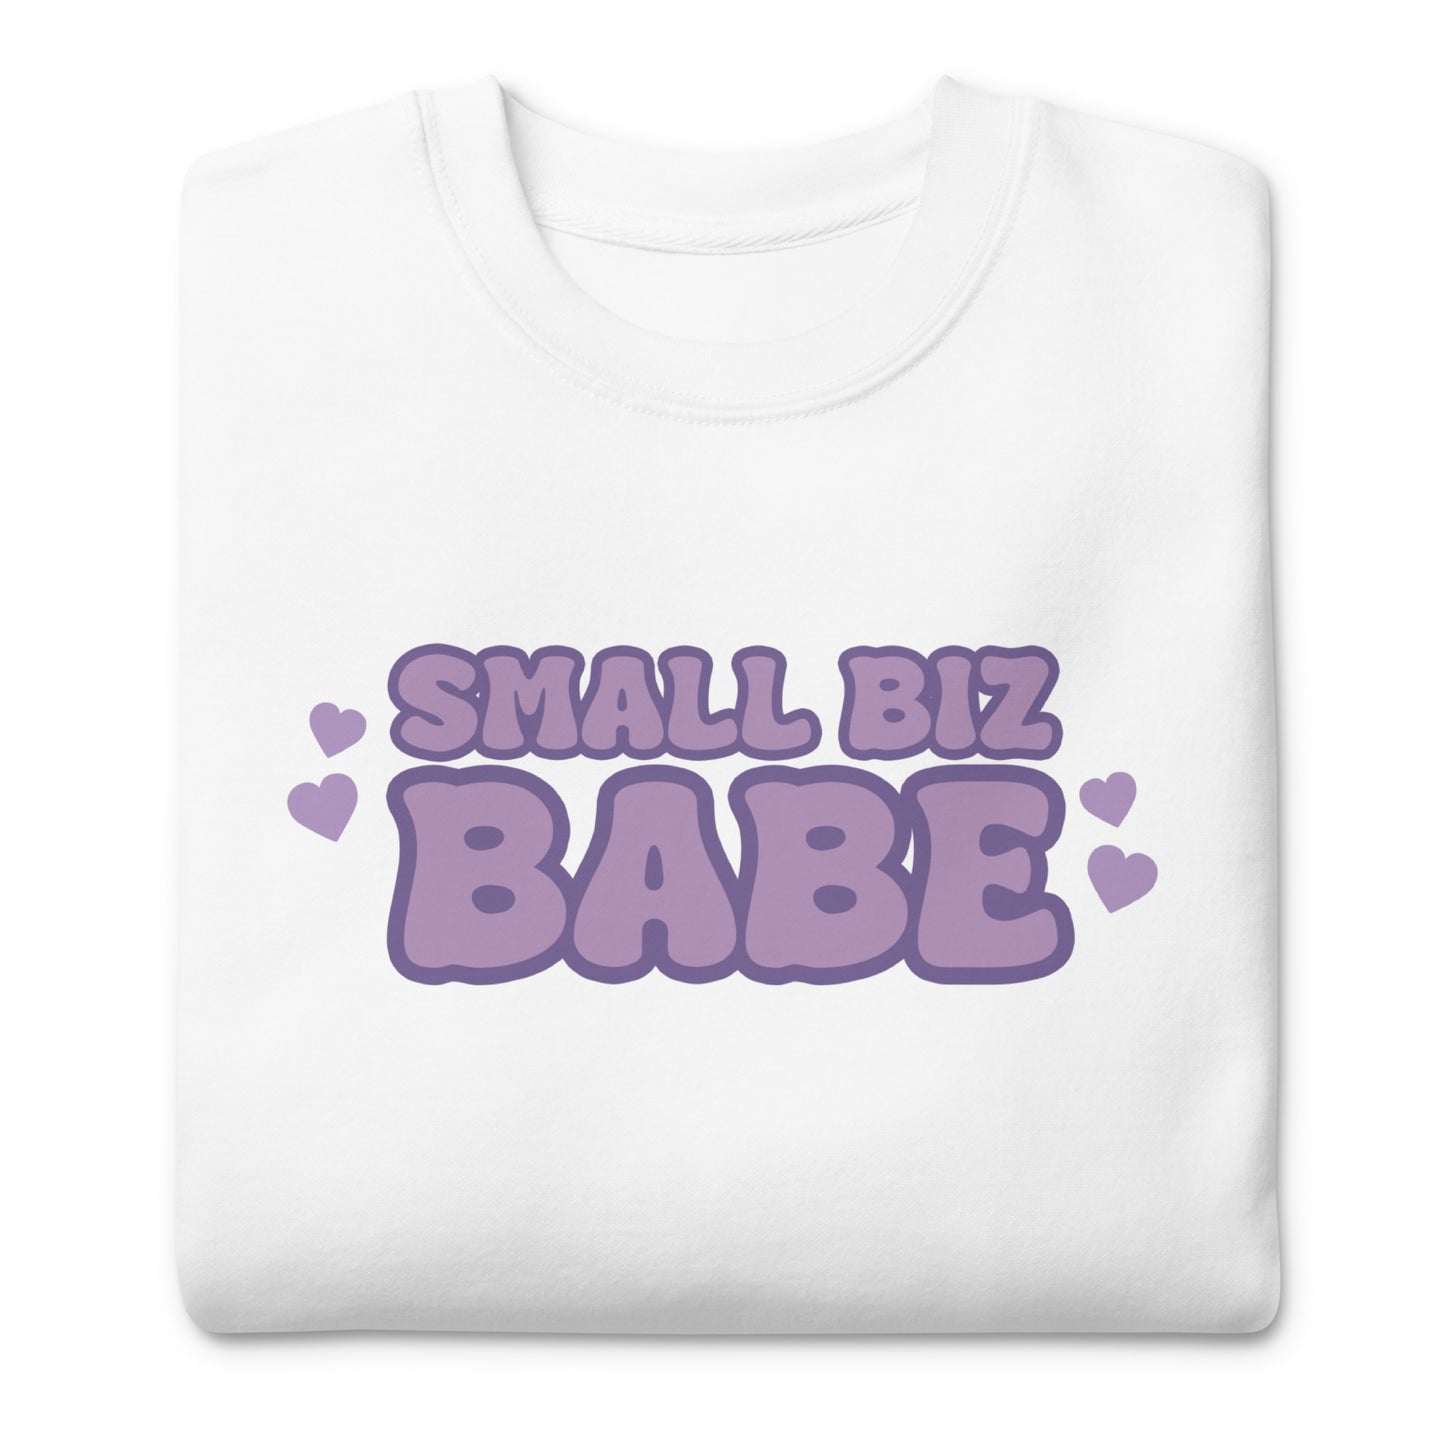 Small Biz Babe | Crewneck